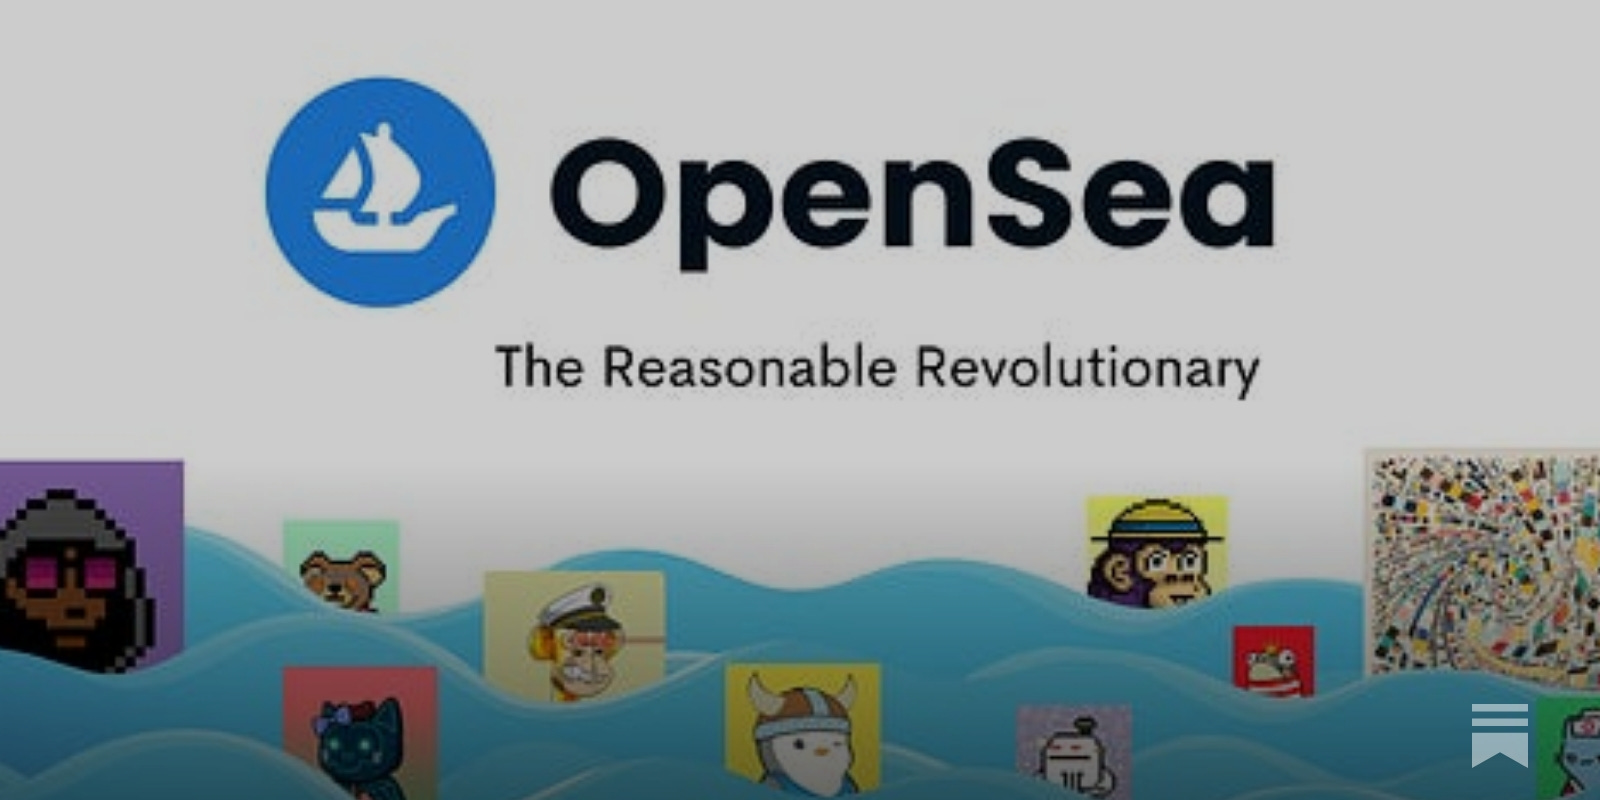 OpenSea: The Reasonable Revolutionary